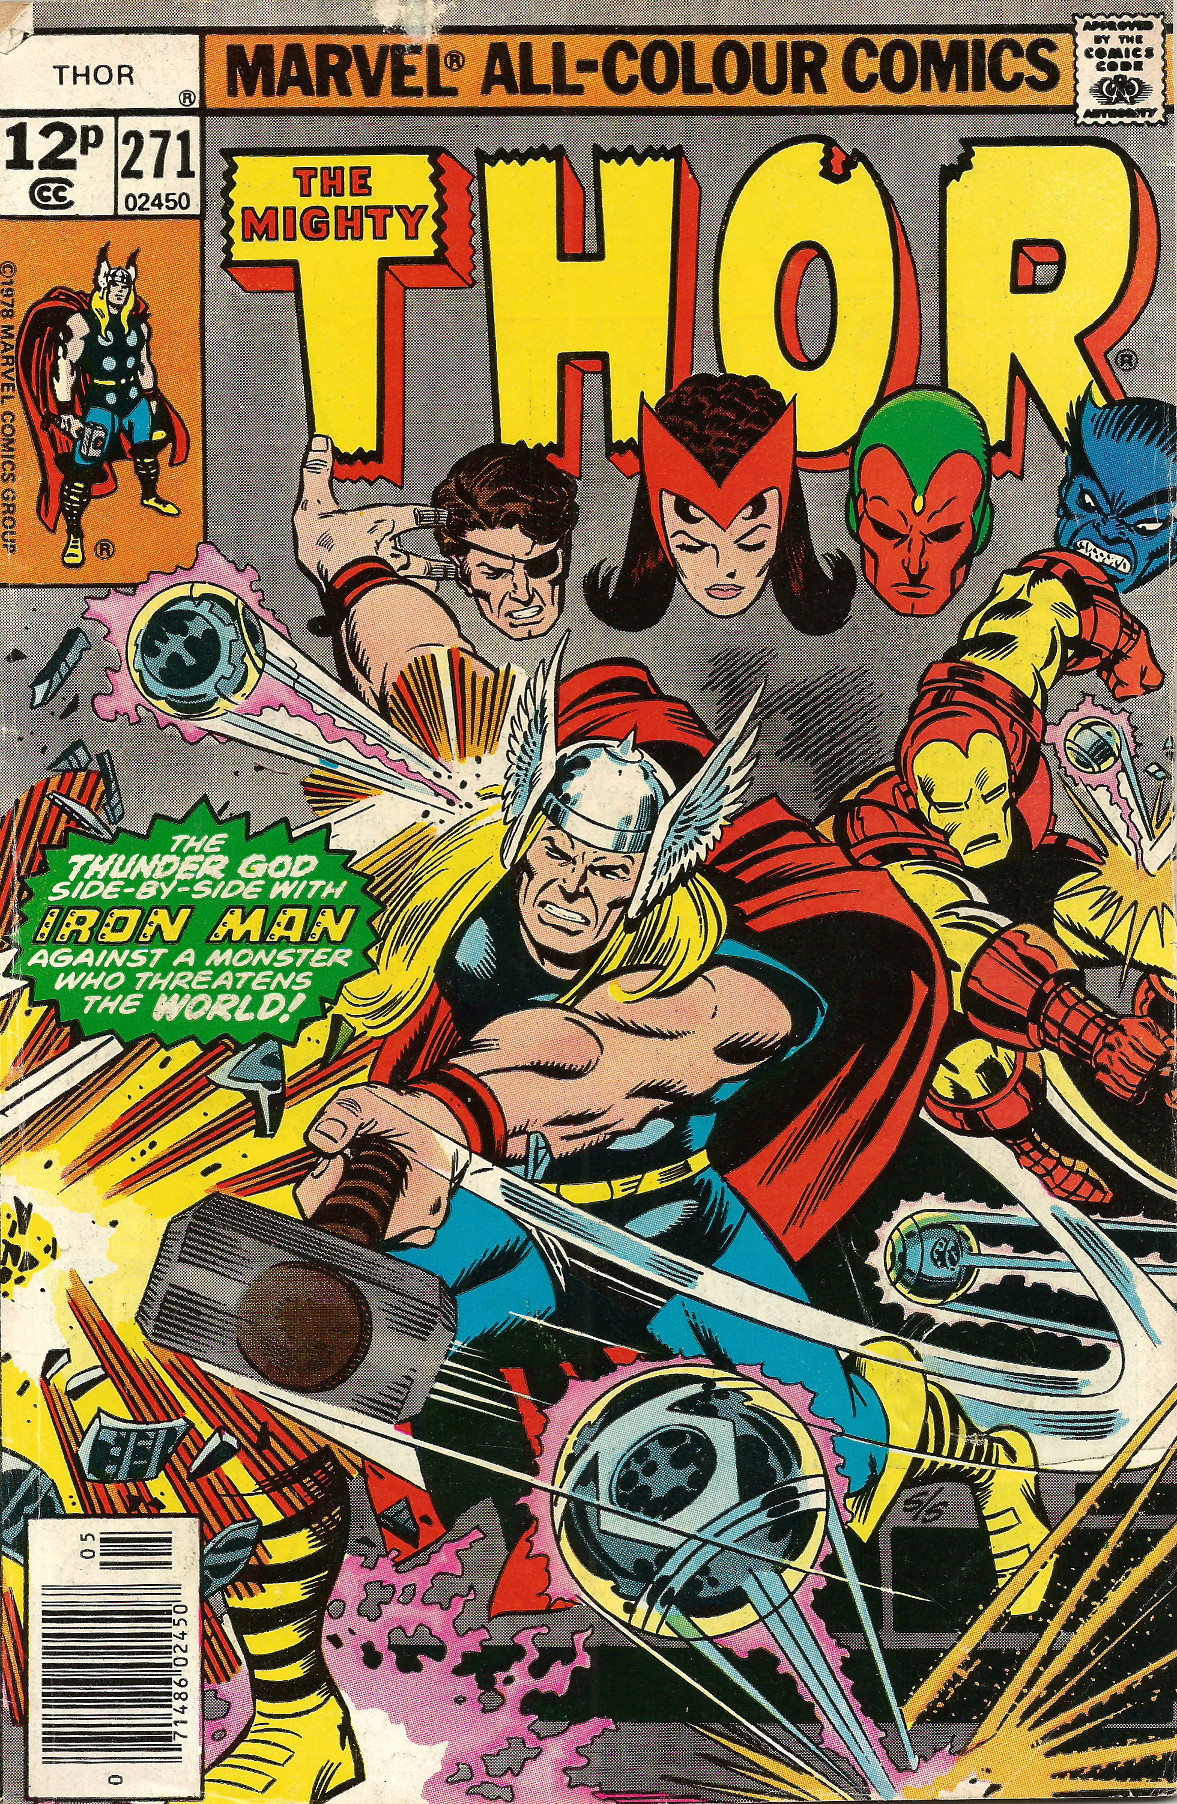 Thor, No. 271 (Marvel Comics, 1978). Cover art by Walt Simonson and Joe Sinnott.From